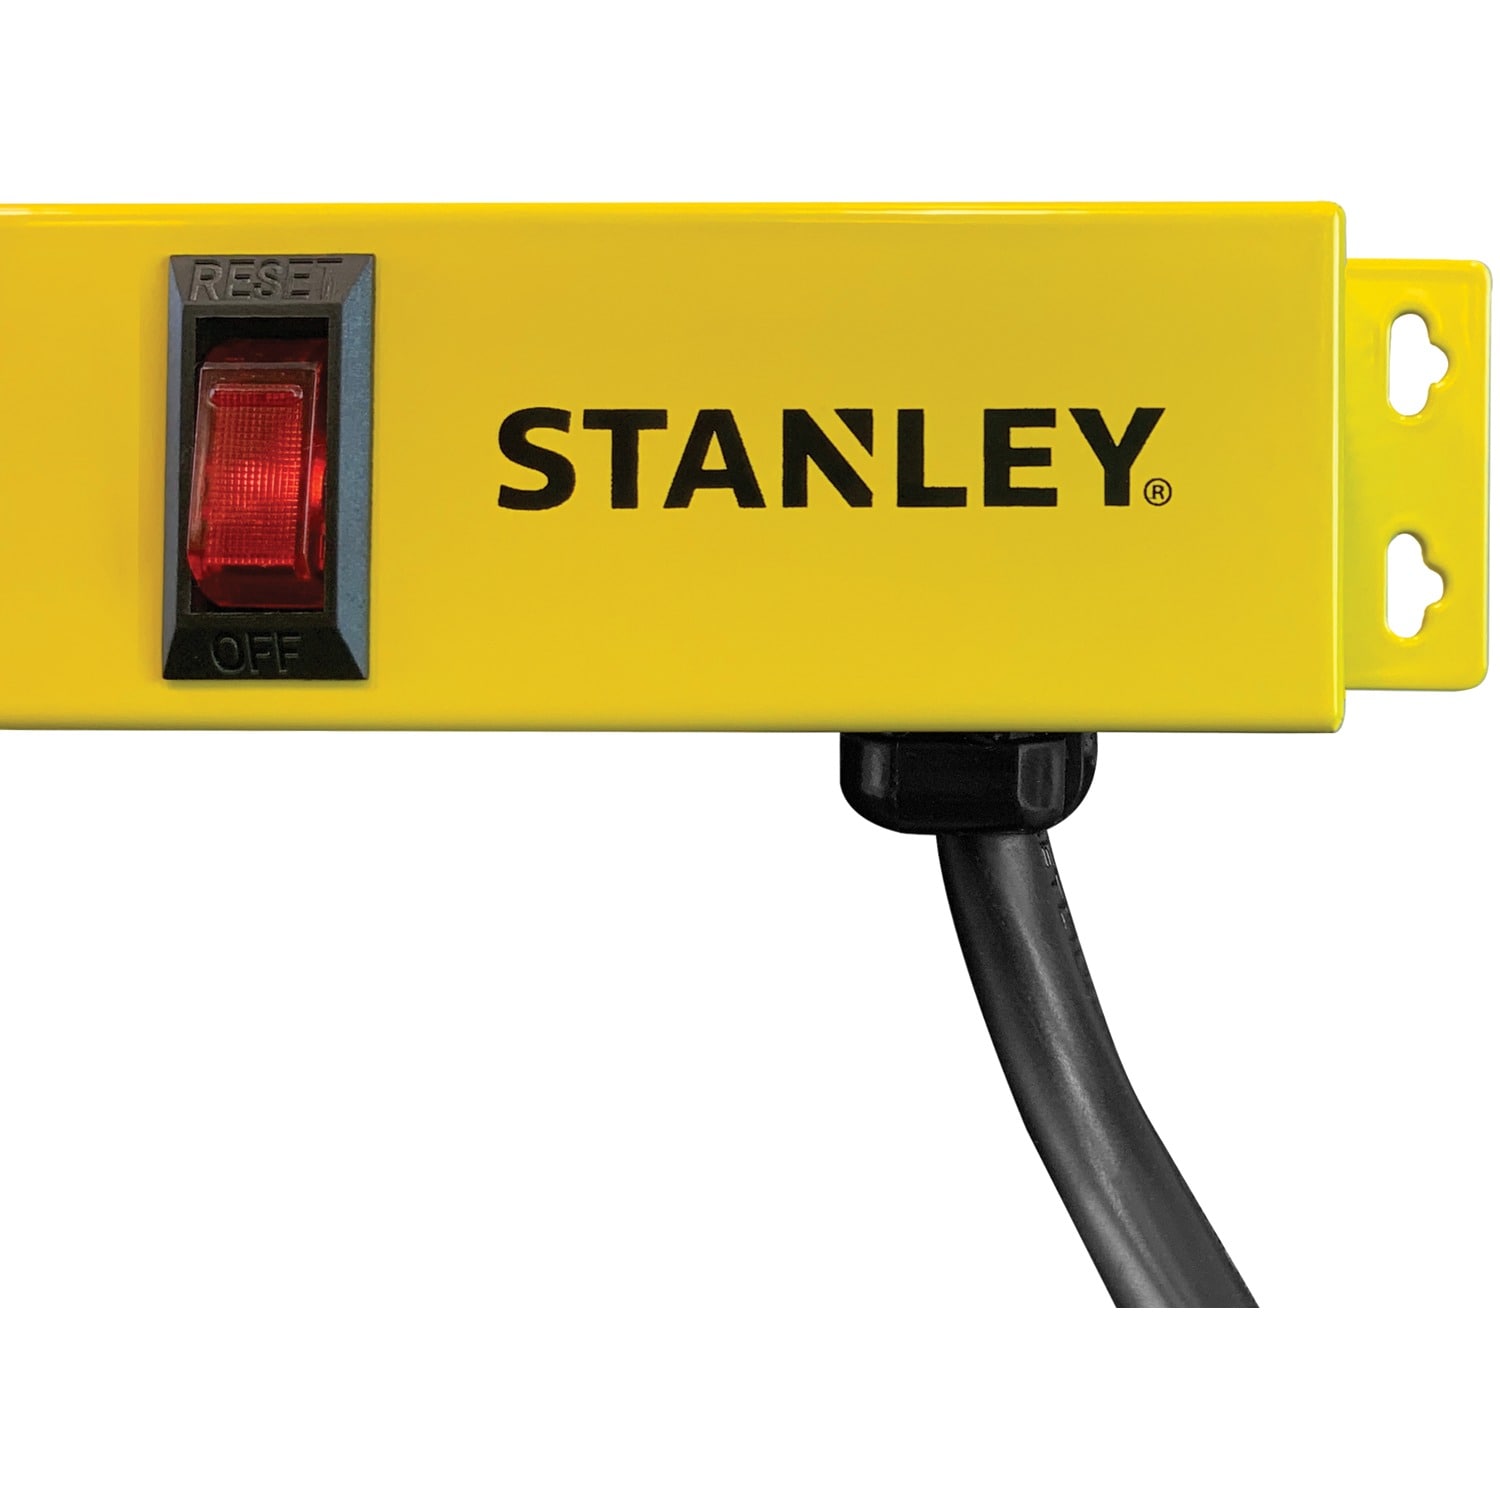 Stanley Surgemax 1080J Home Electronics Surge Protector